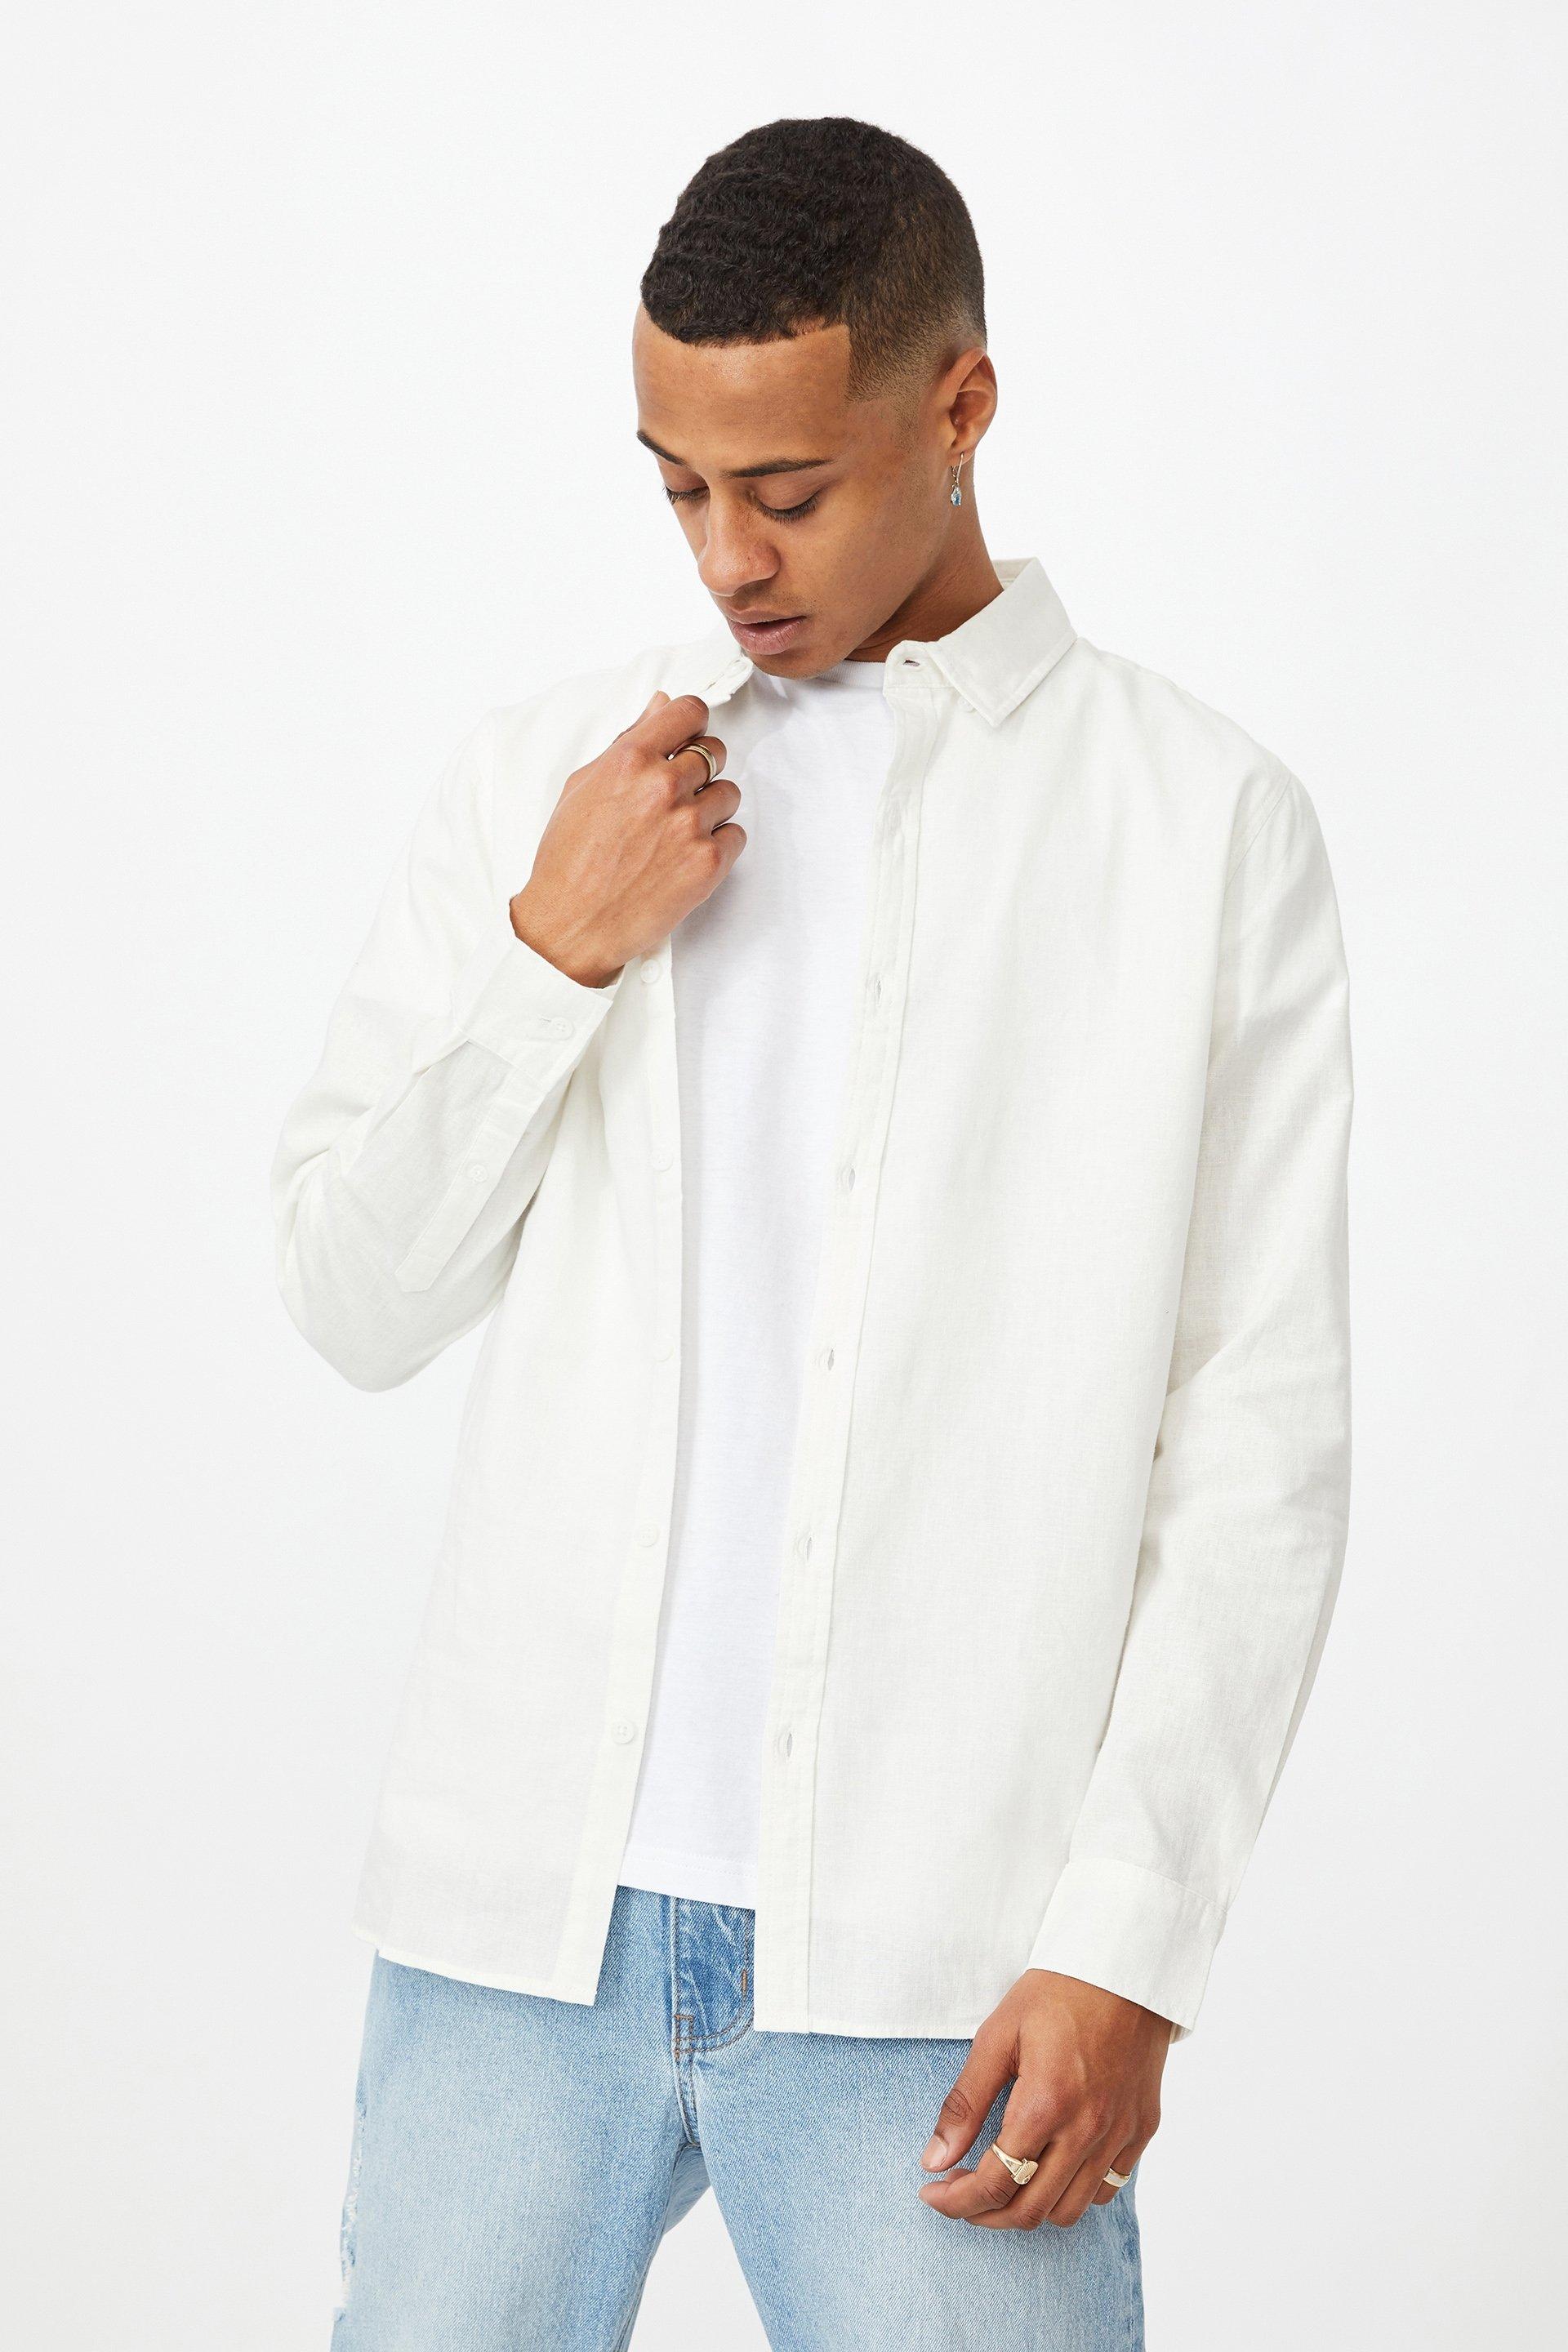 Linen cotton long sleeve shirt - white Cotton On Shirts | Superbalist.com